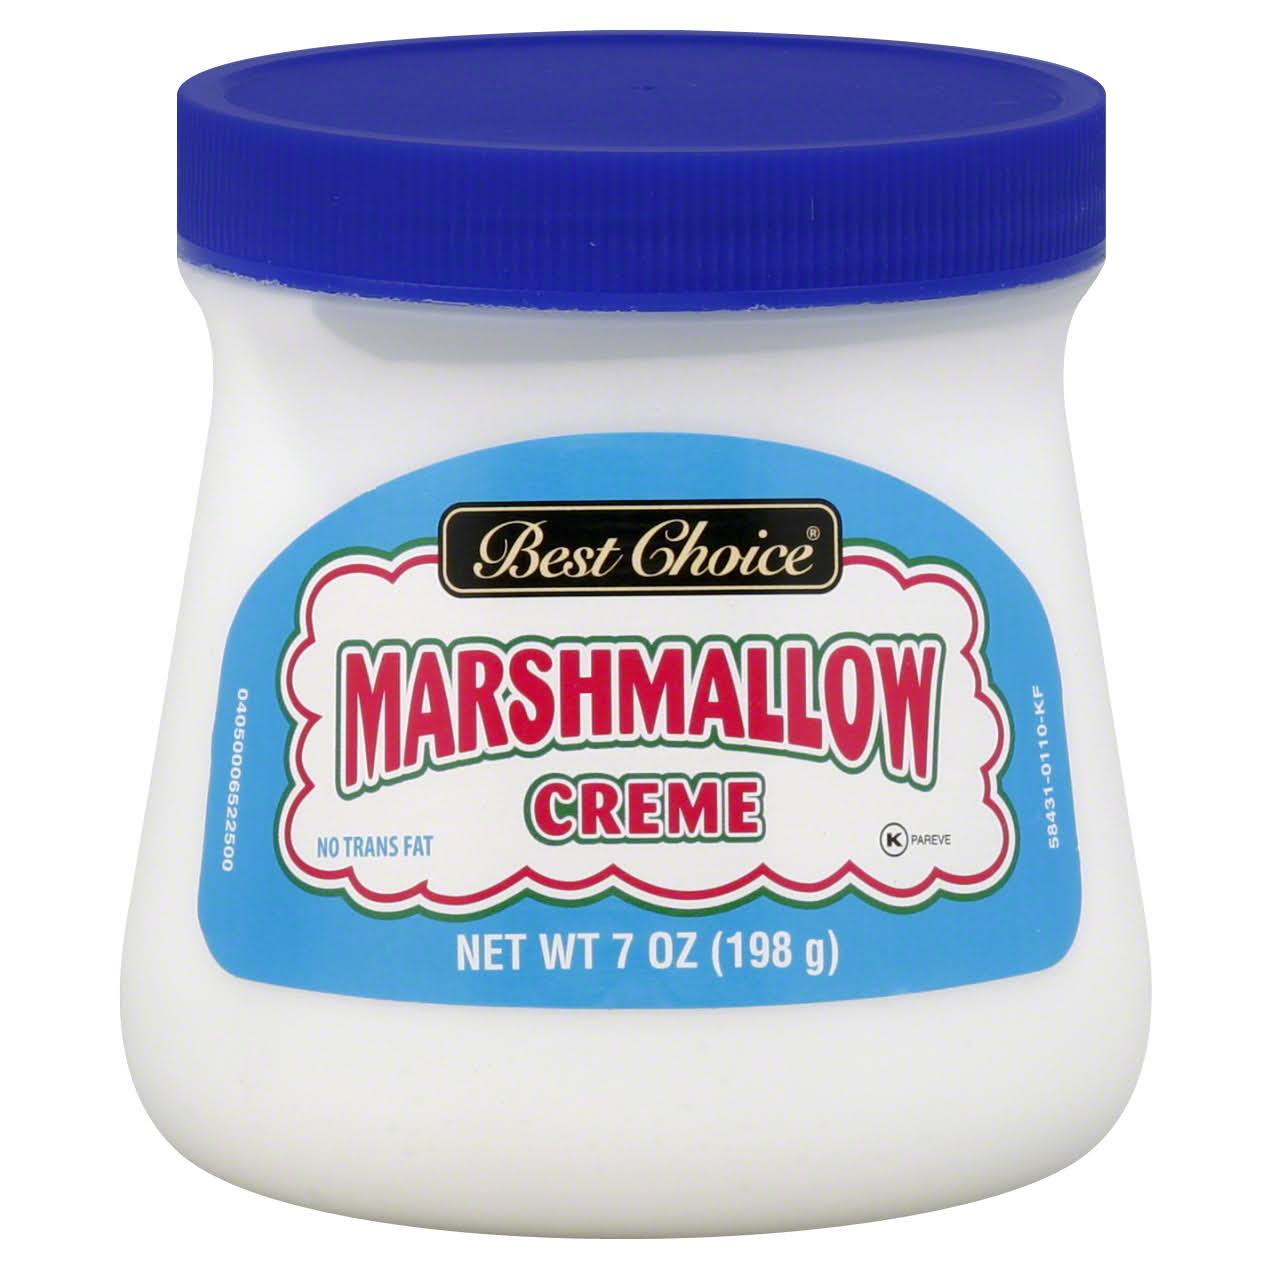 Best Choice Marshmallow Creme - 7 oz